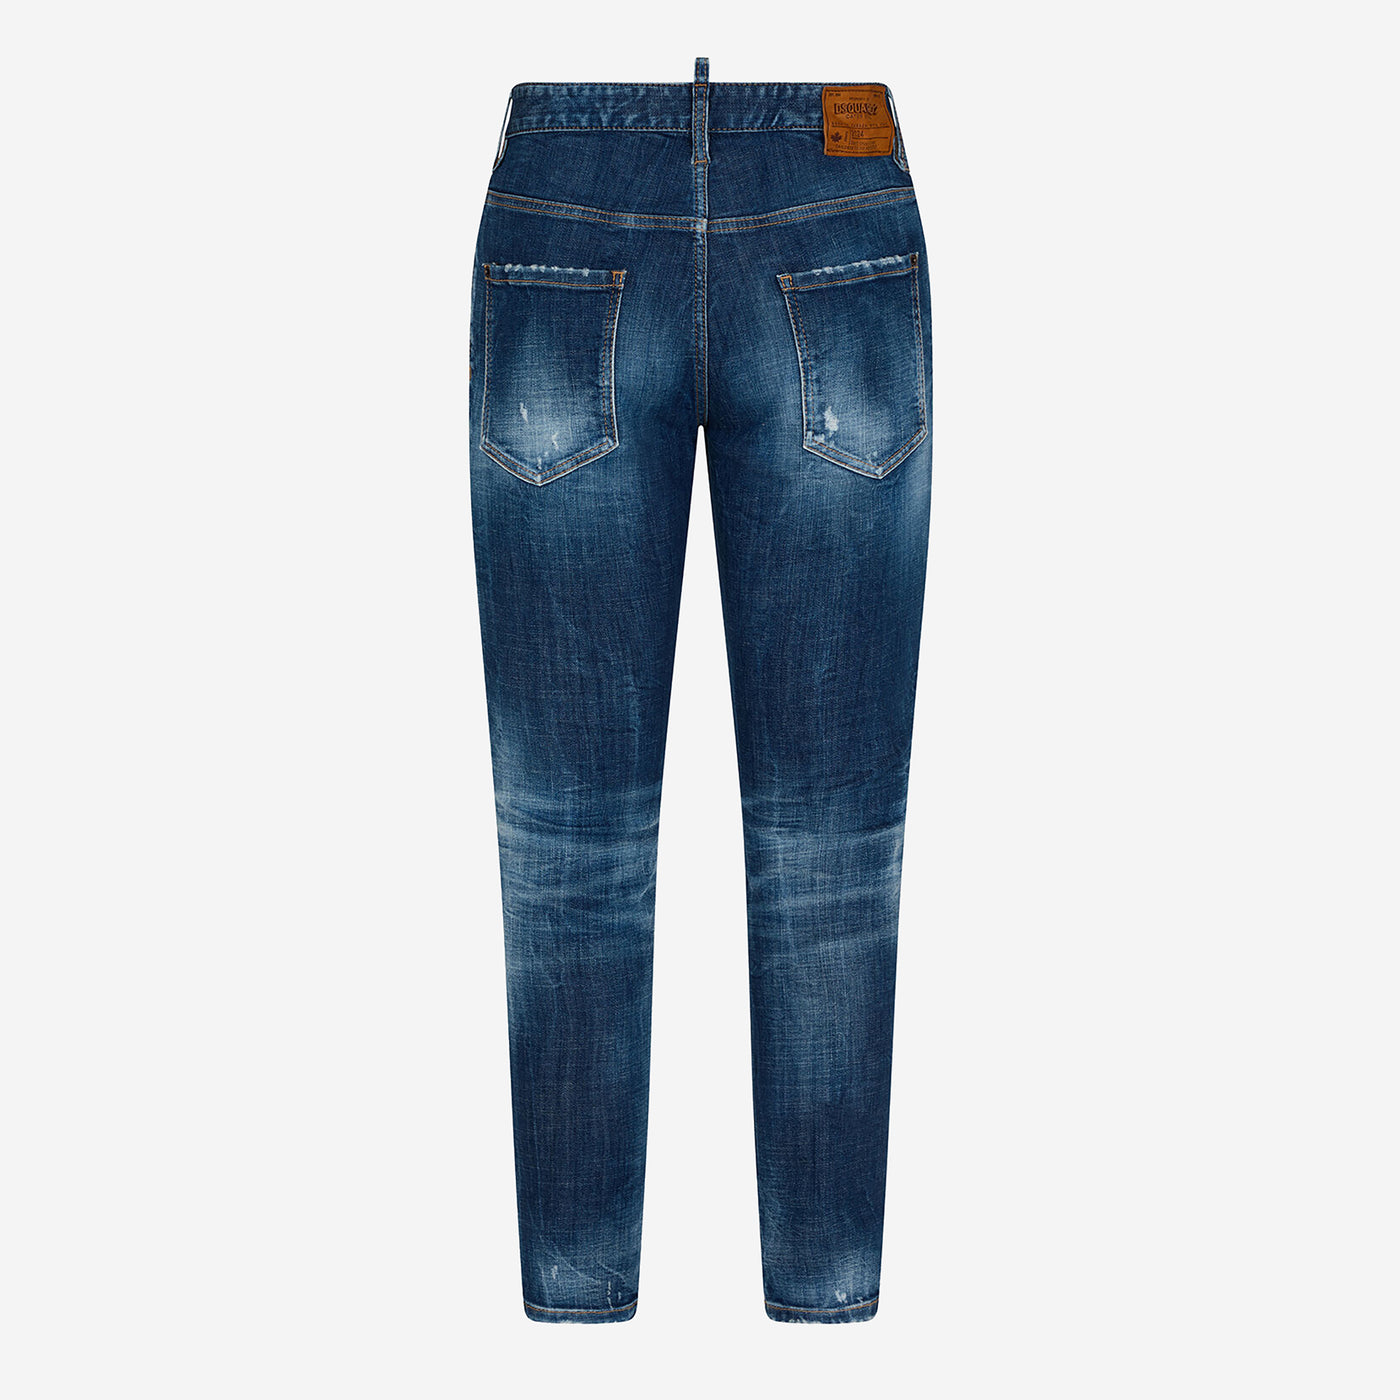 DSquared2 Dark 70'S Wash Super Twinky Jeans